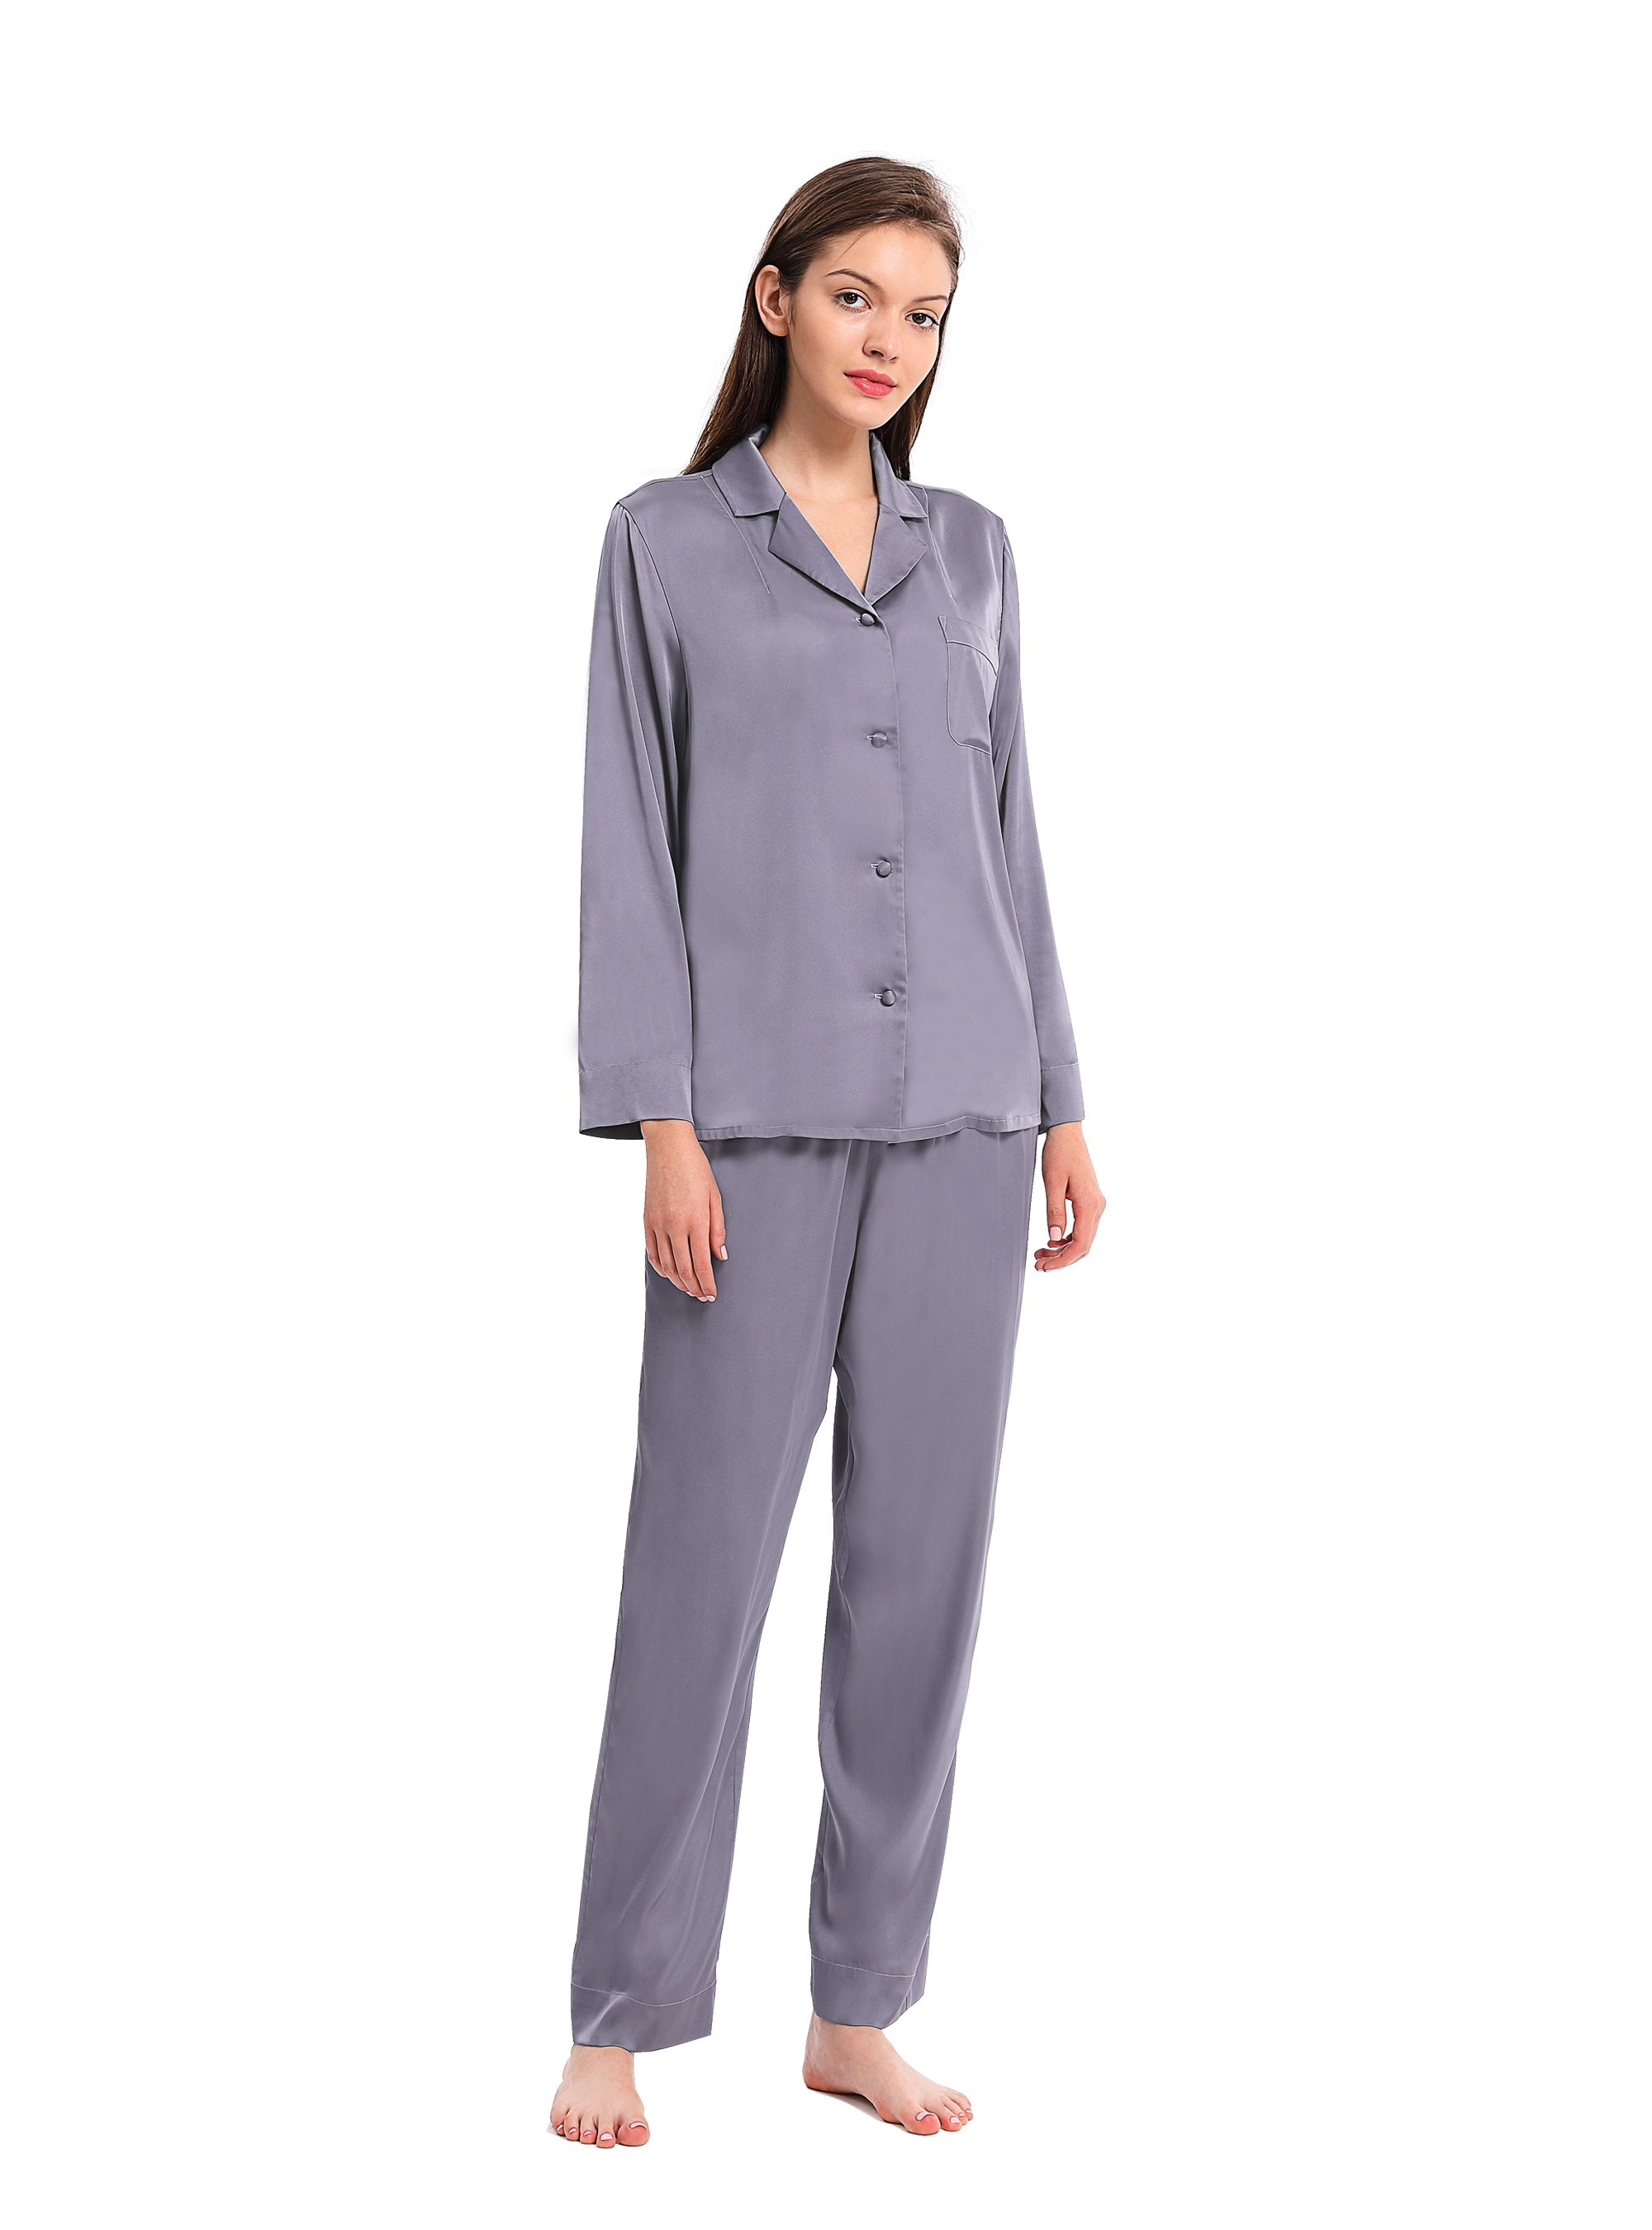 Pajama Set for Women Long Sleeve Button-Down Sleepwear - FemoFit